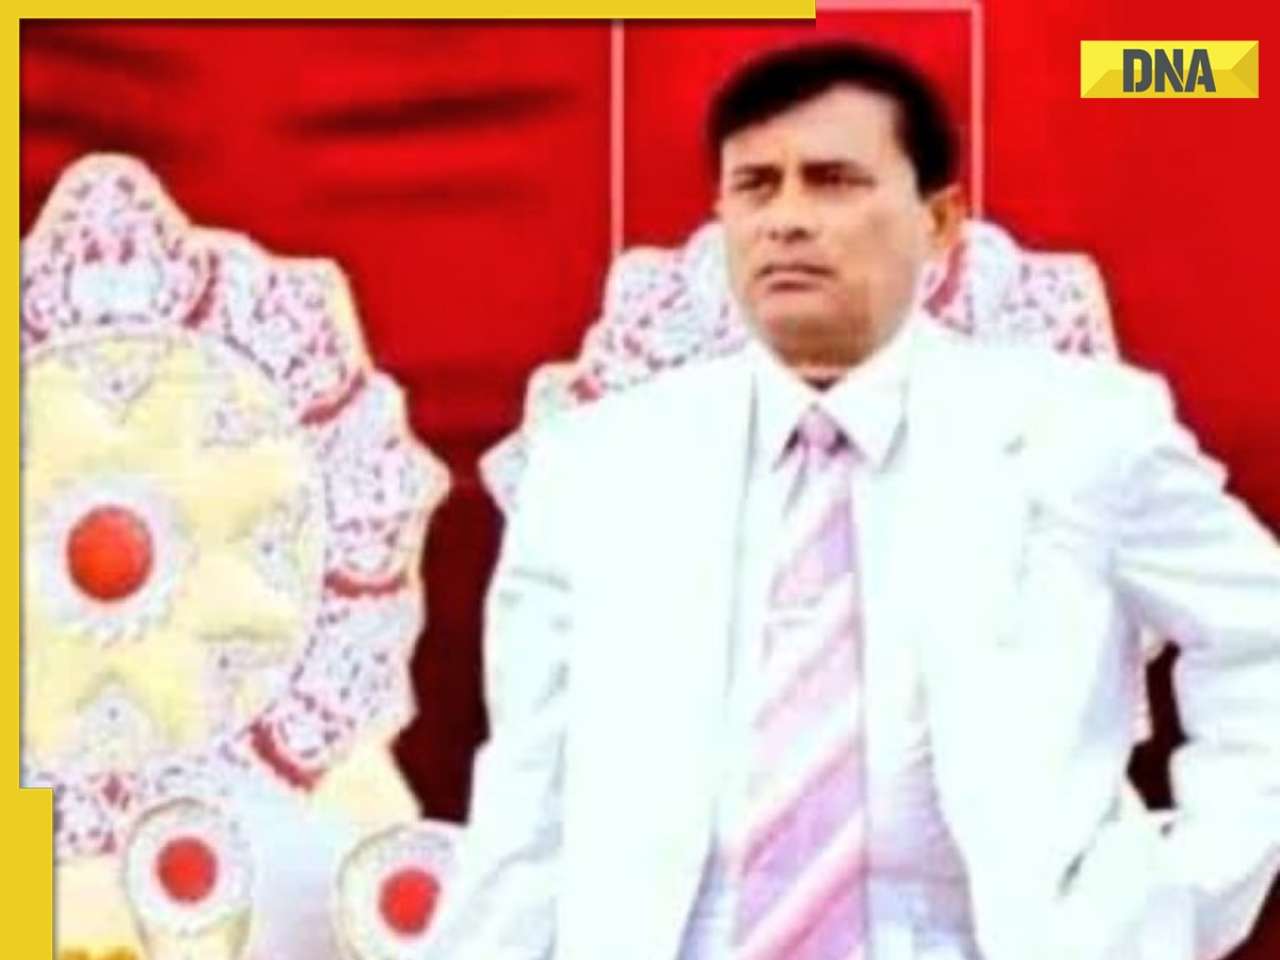 DNA TV Show: How Narayan Sakar Hari alias 'Bhole Baba' used to trap people